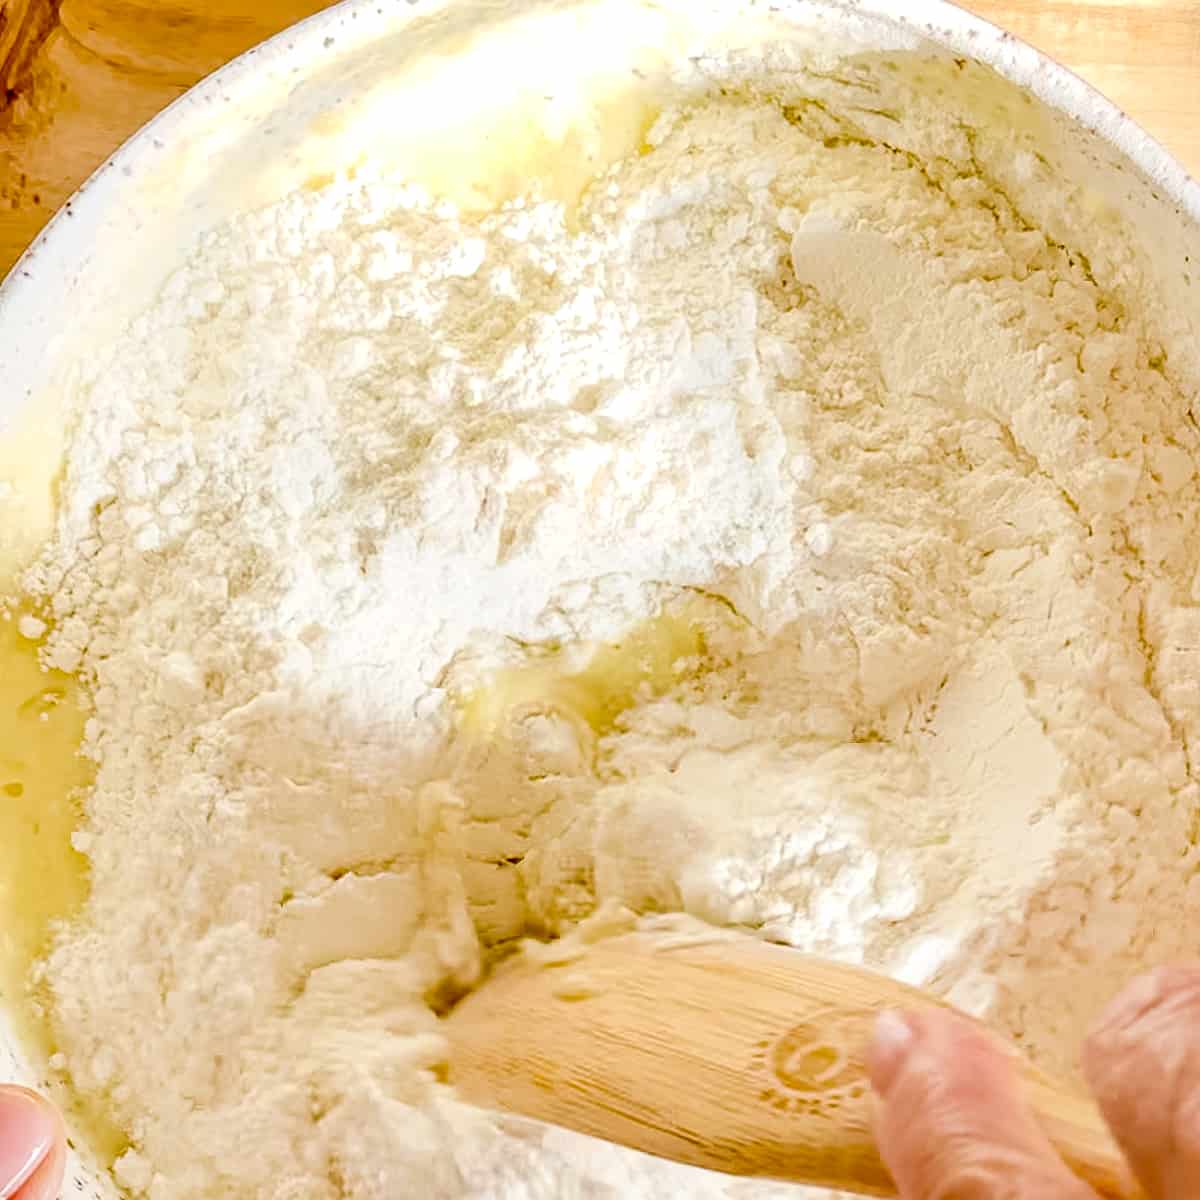 stirring dry banana nut muffin ingredients into wet ingredients.